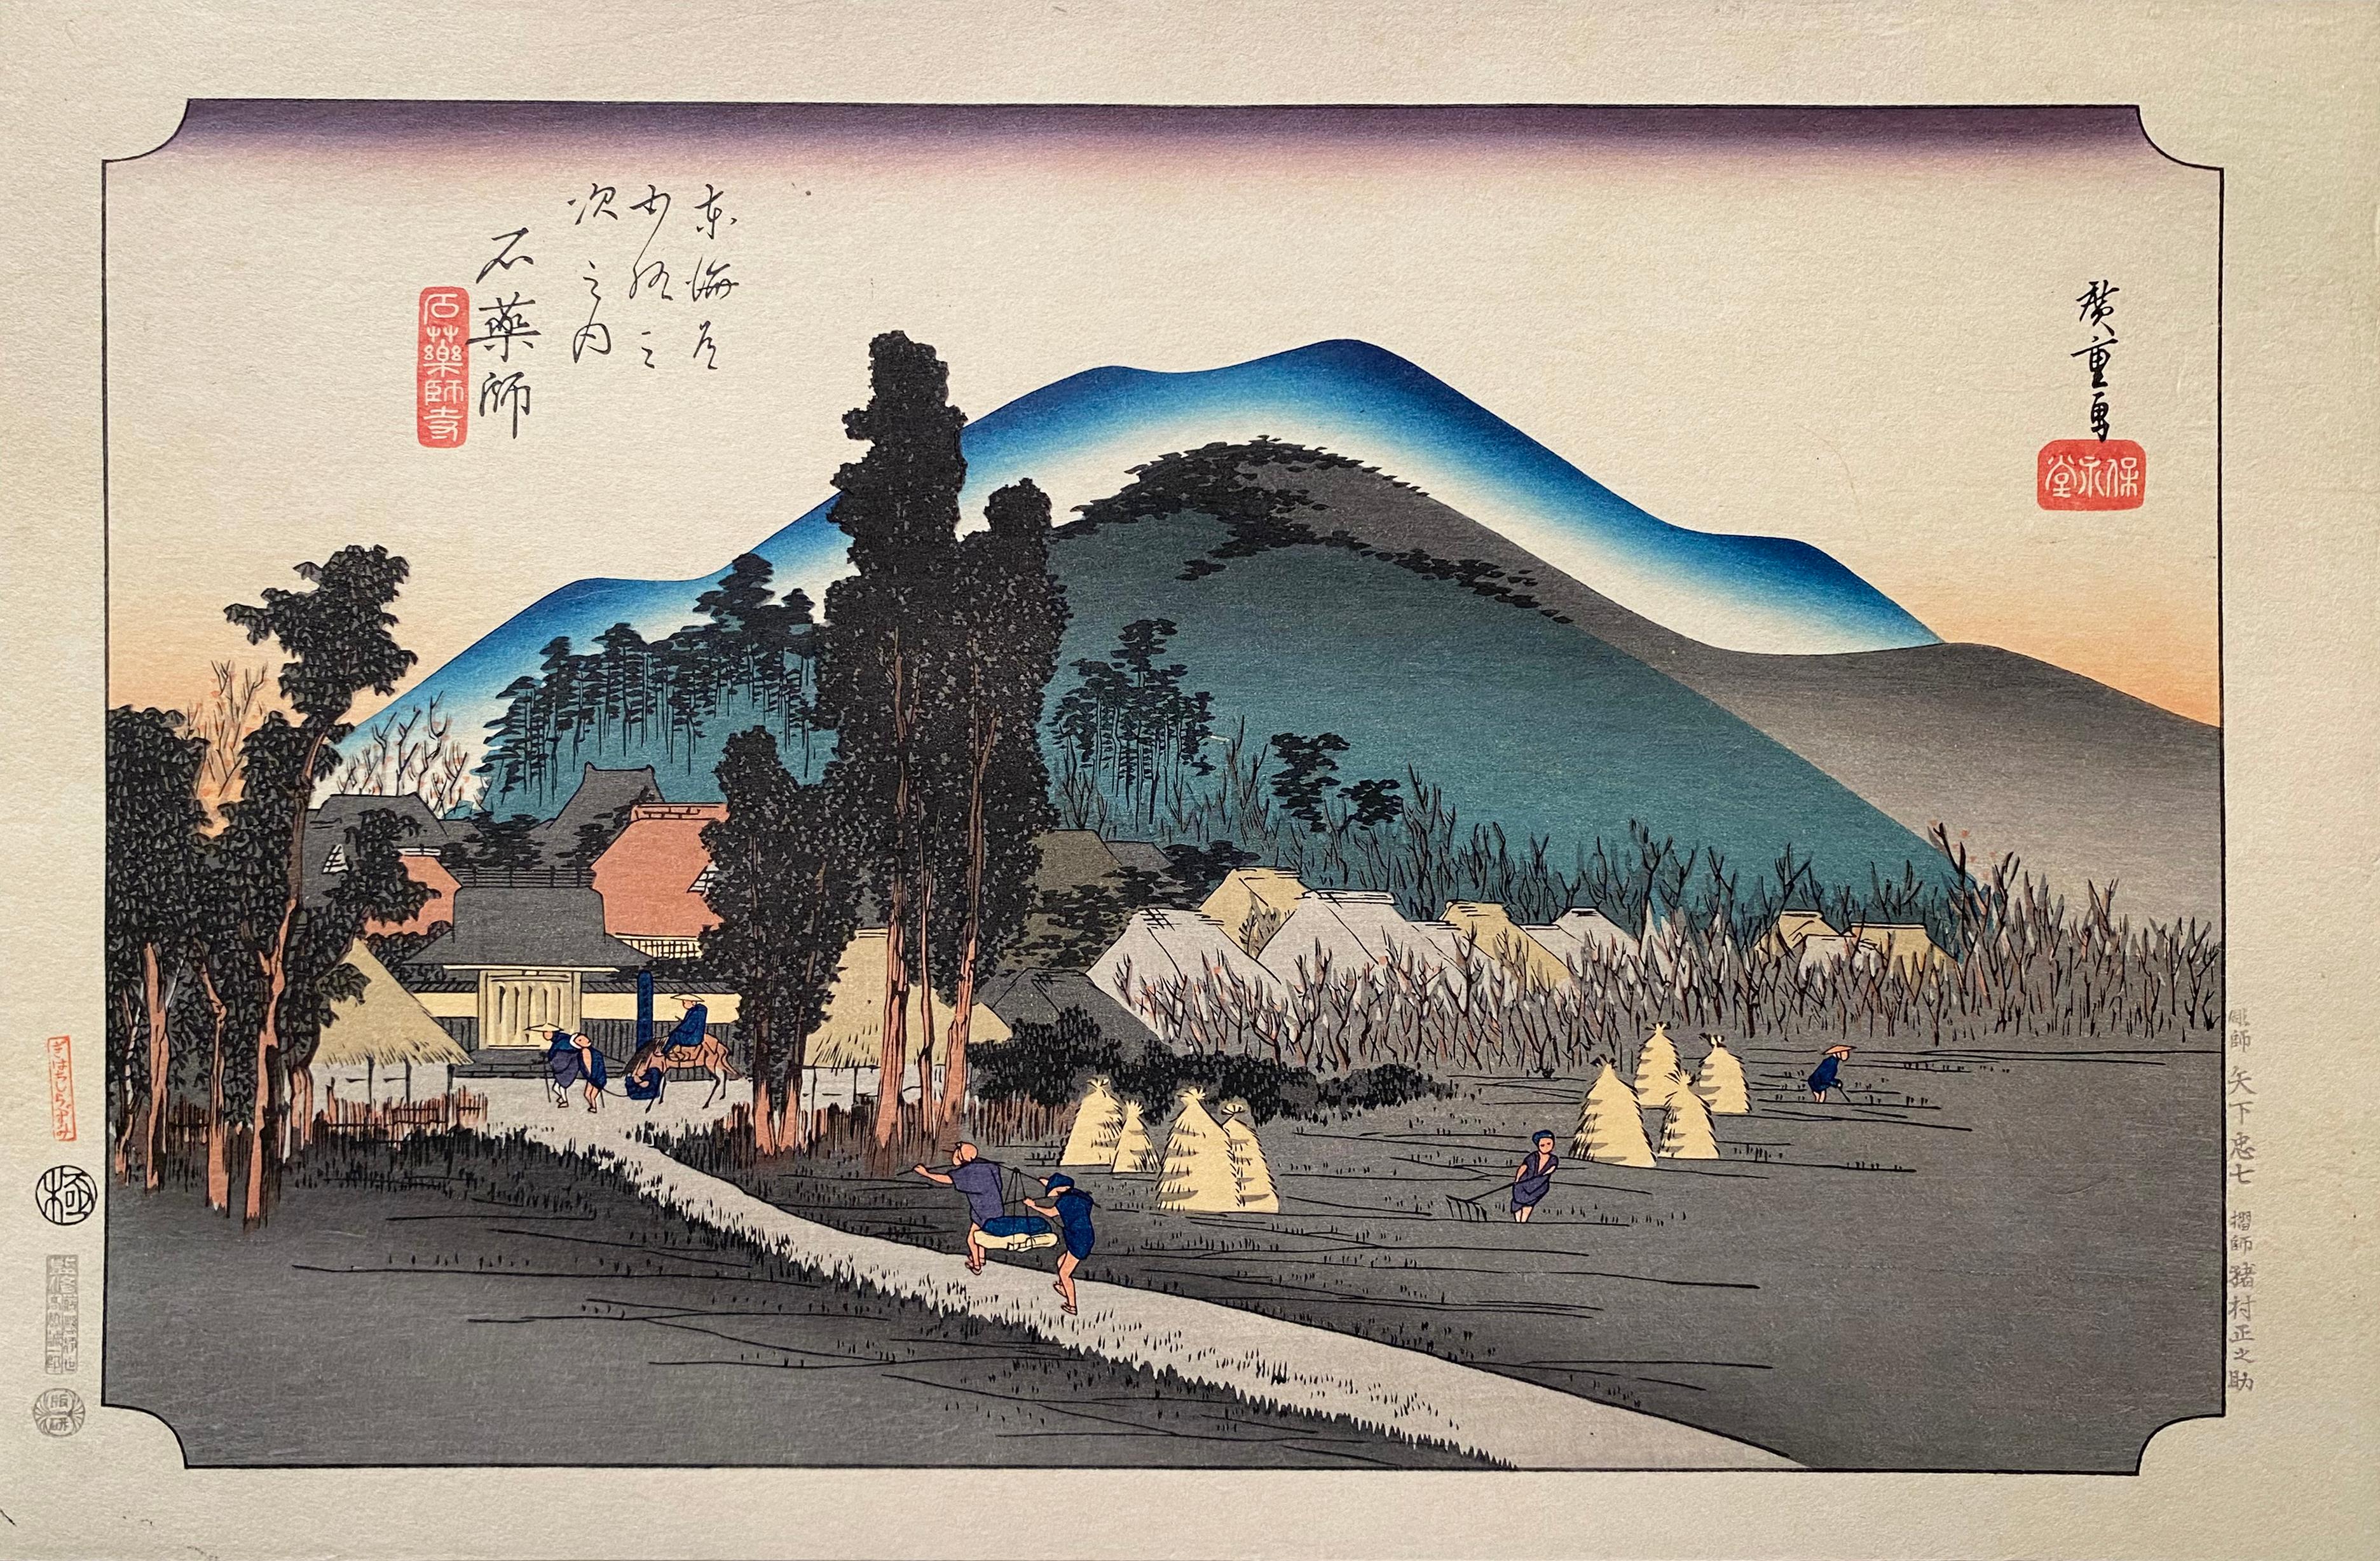 Utagawa Hiroshige (Ando Hiroshige) Landscape Print - 'Ishiyakushi Temple', After Utagawa Hiroshige 歌川廣重, Ukiyo-e Woodblock, Tokaido